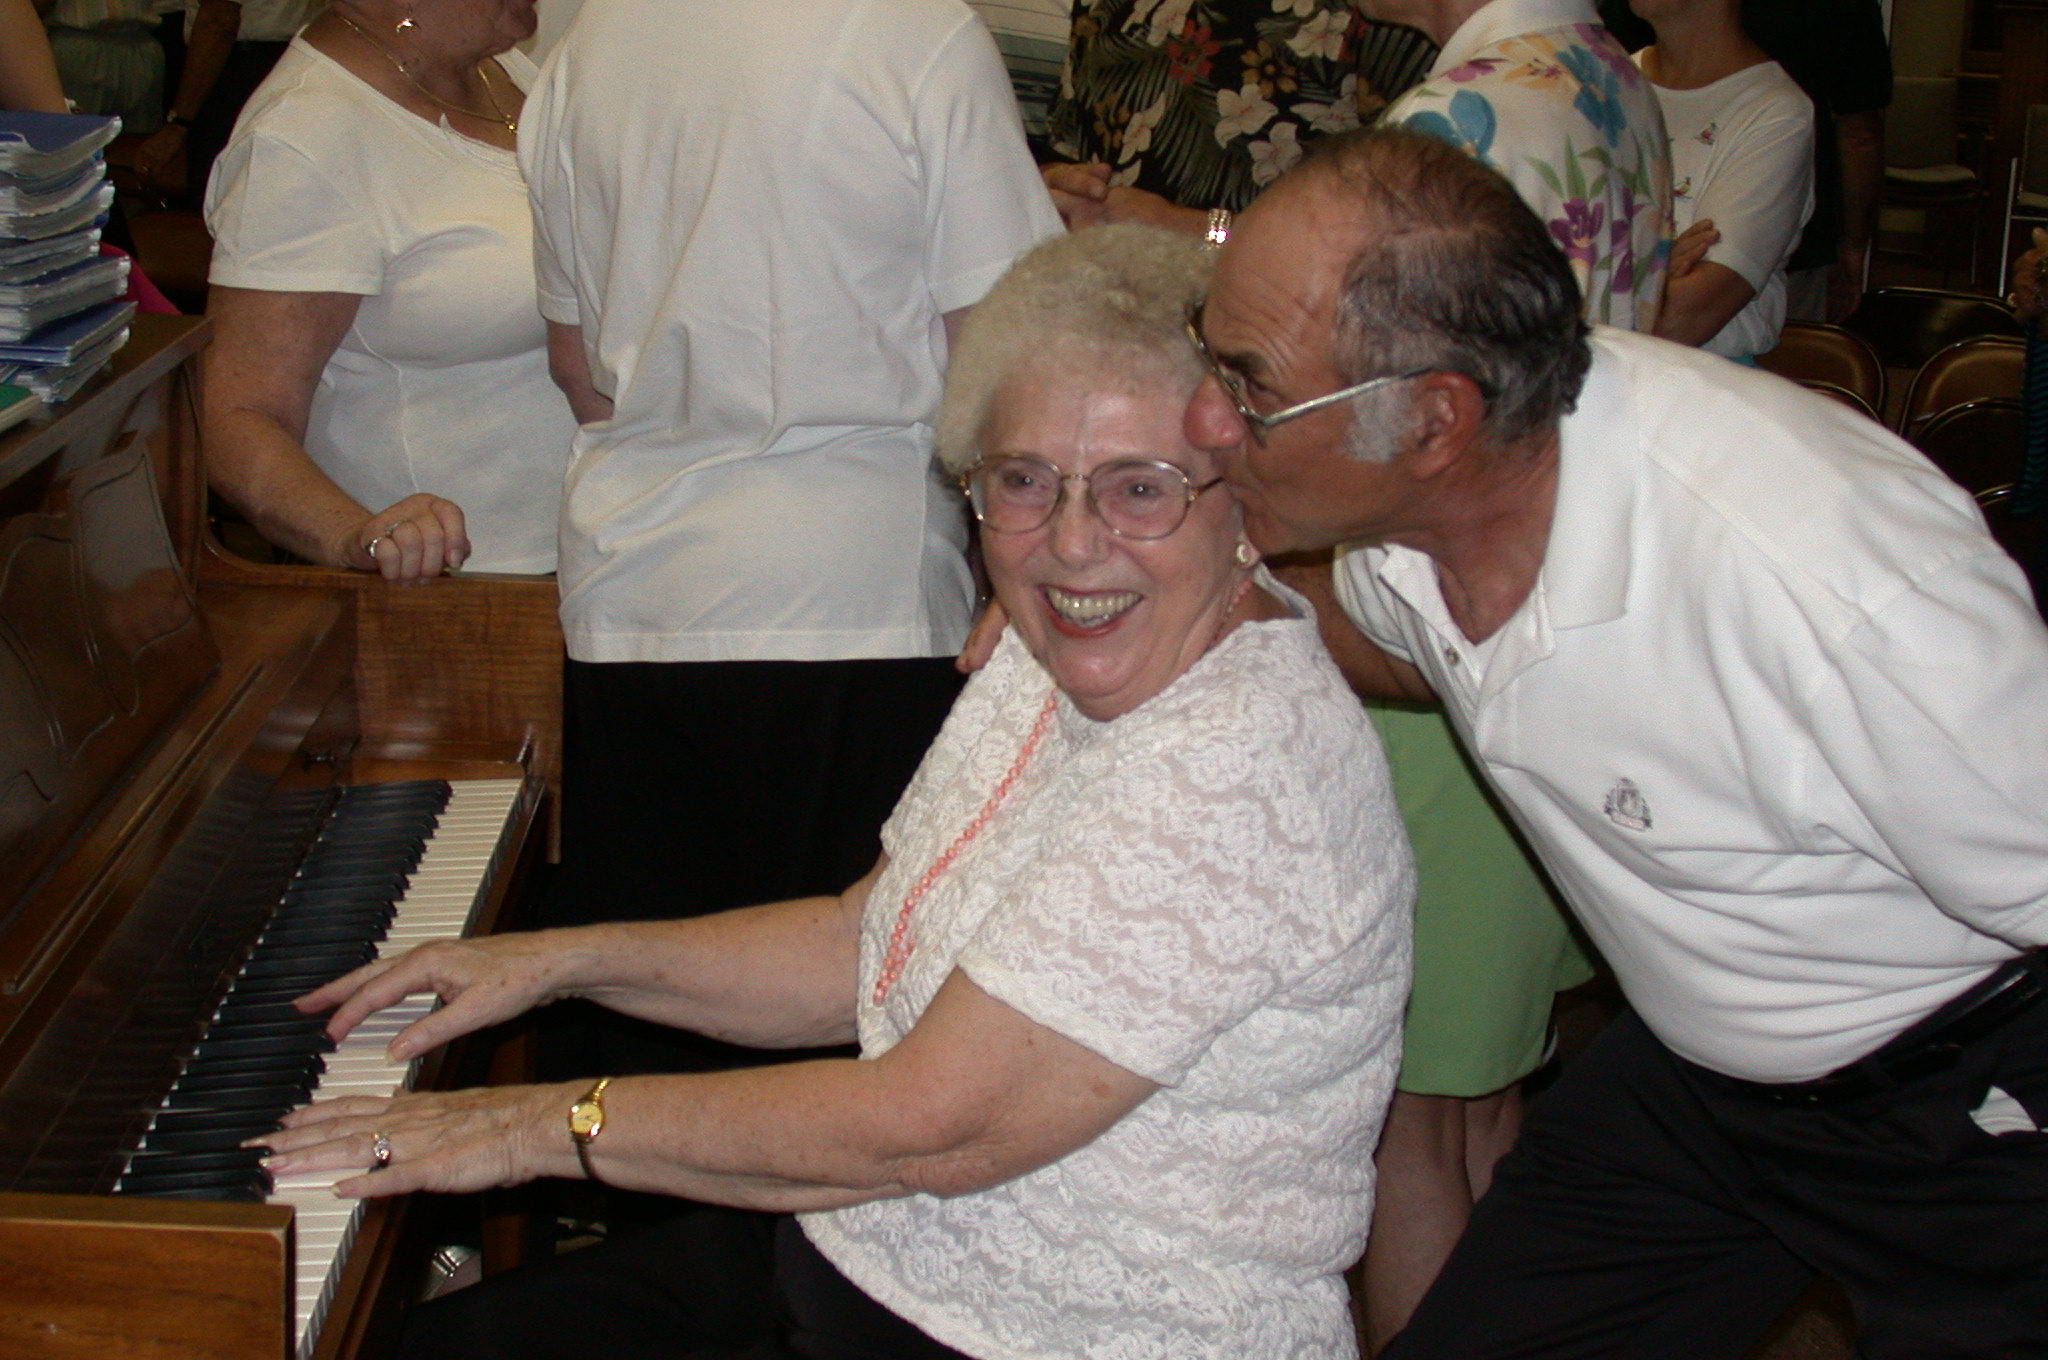 Burlene Jones playing the piano as her husband kisses her cheek